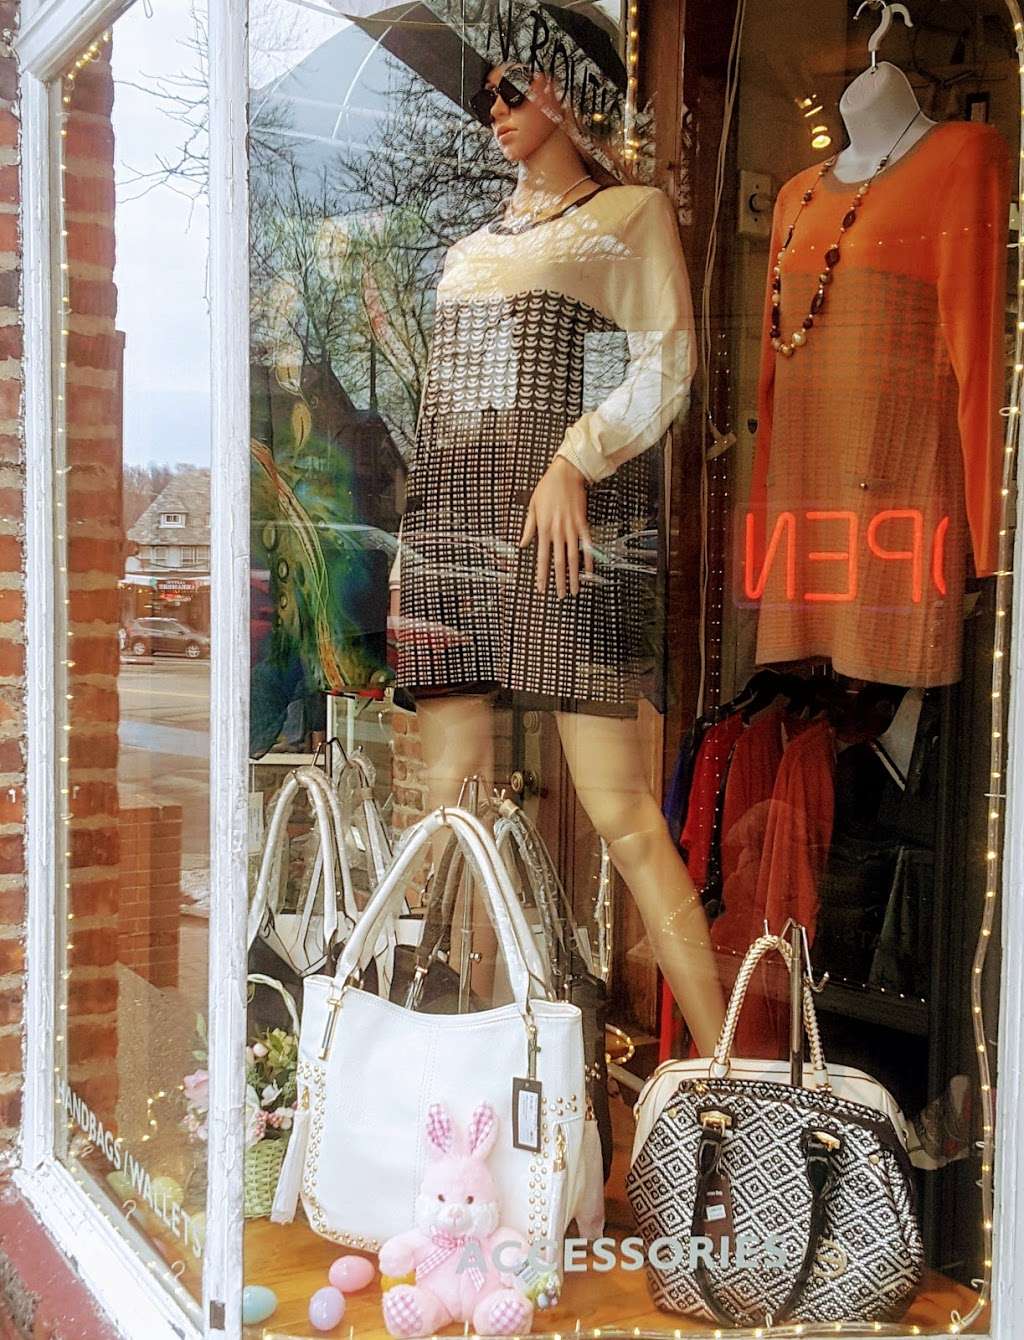 Nihao Fashion Boutique | 1823, 21 White Deer Plaza, Sparta Township, NJ 07871, USA | Phone: (973) 557-4546